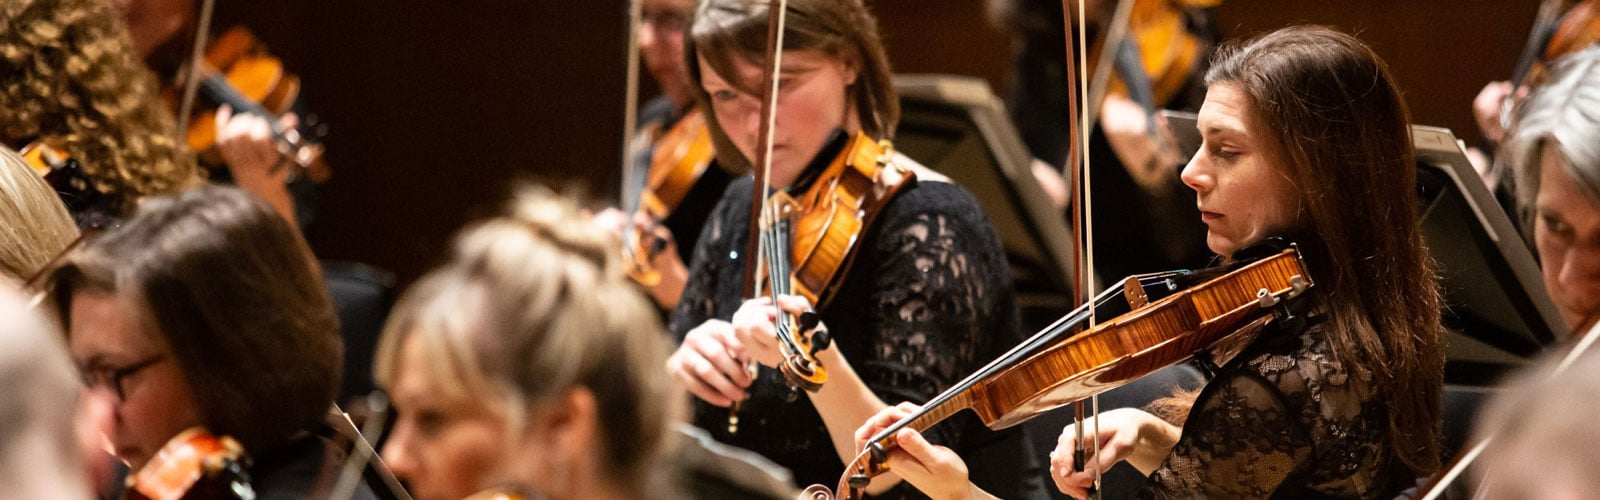 Royal Scottish National Orchestra violins section, majority women in black dress